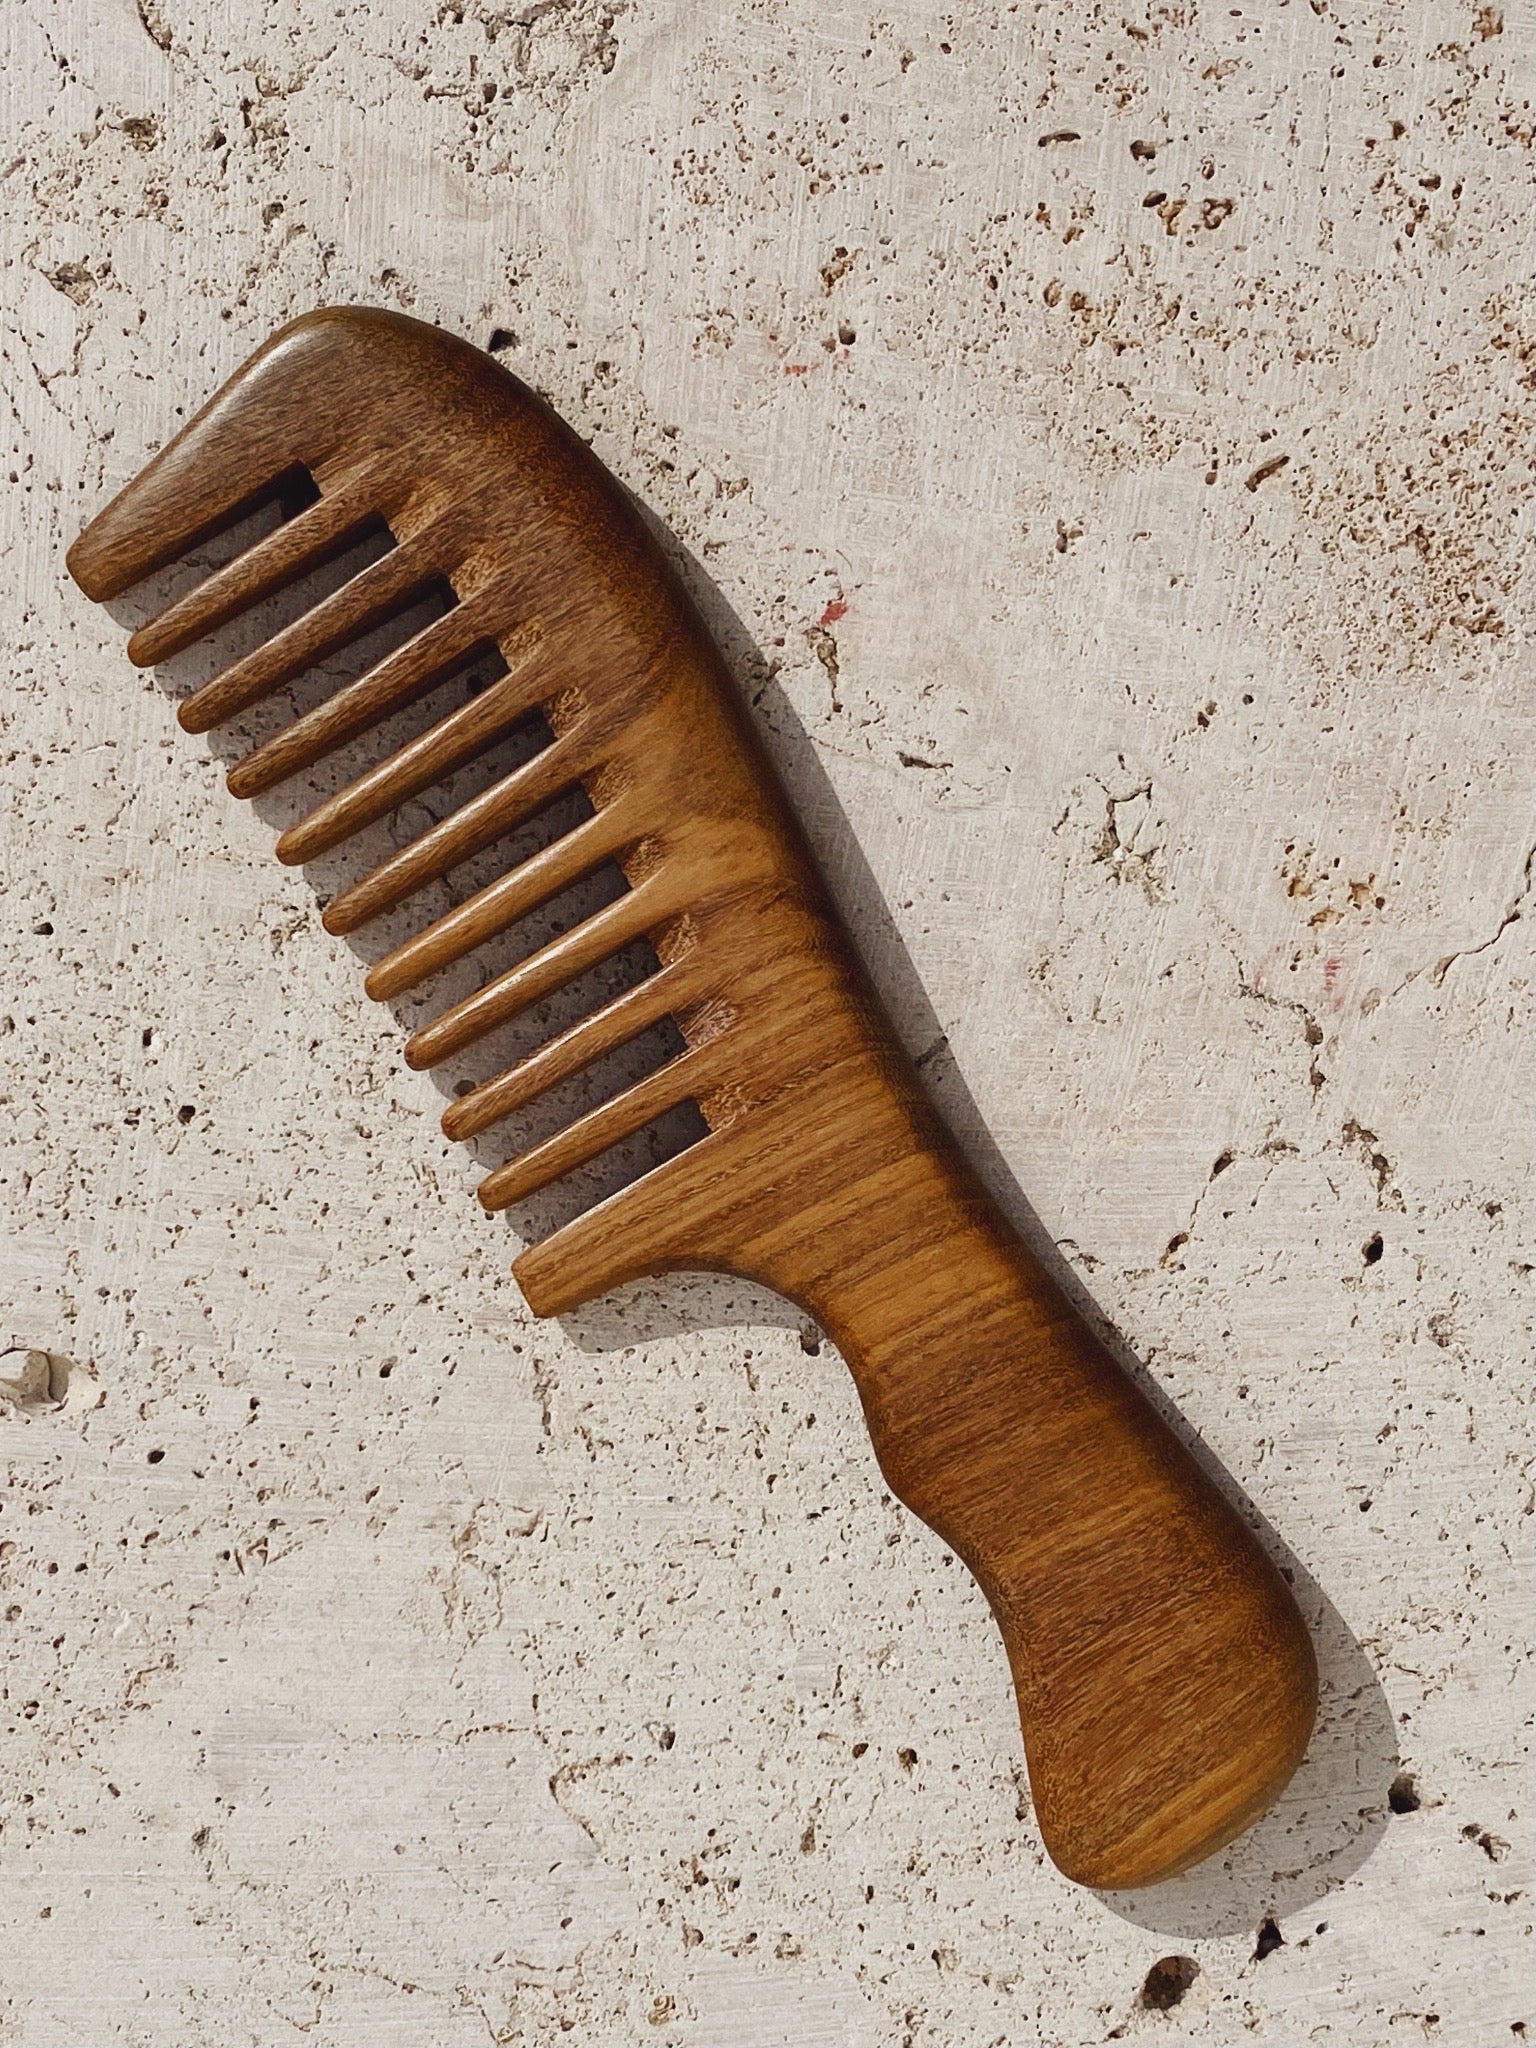 sandalwood comb